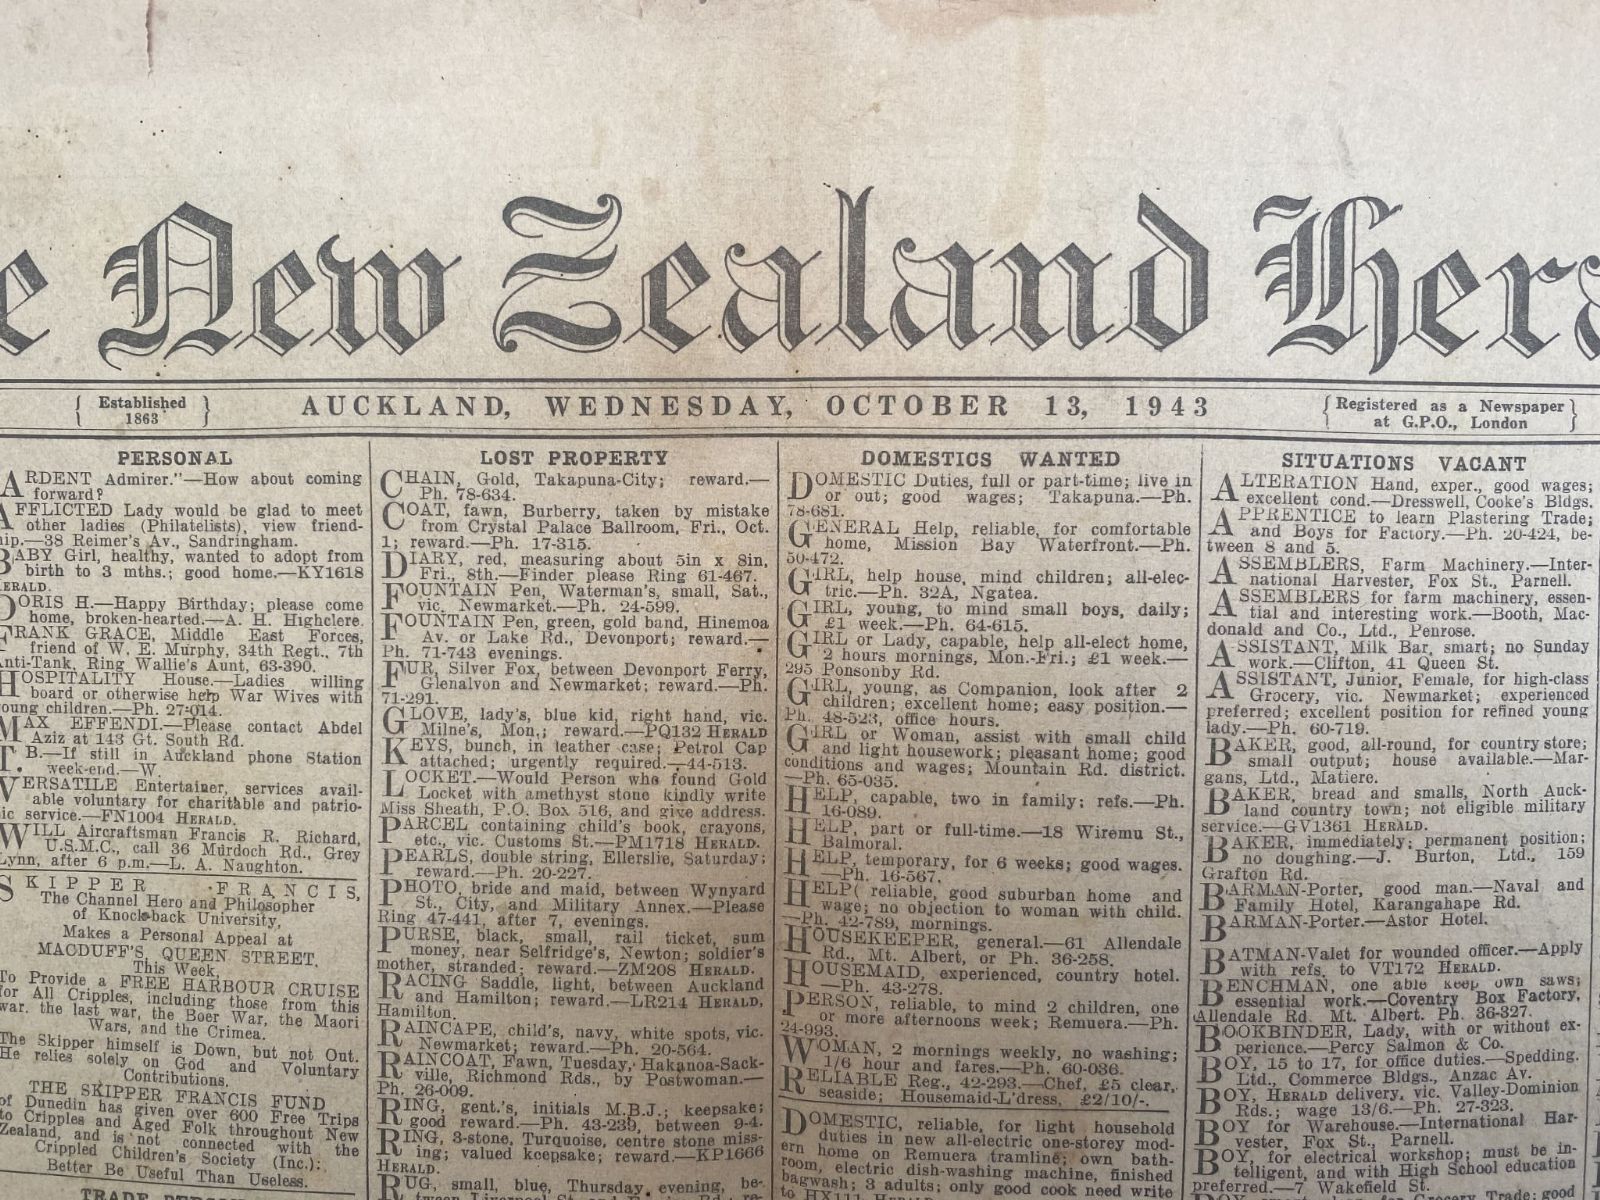 OLD NEWSPAPER: The New Zealand Herald, 13 October 1943